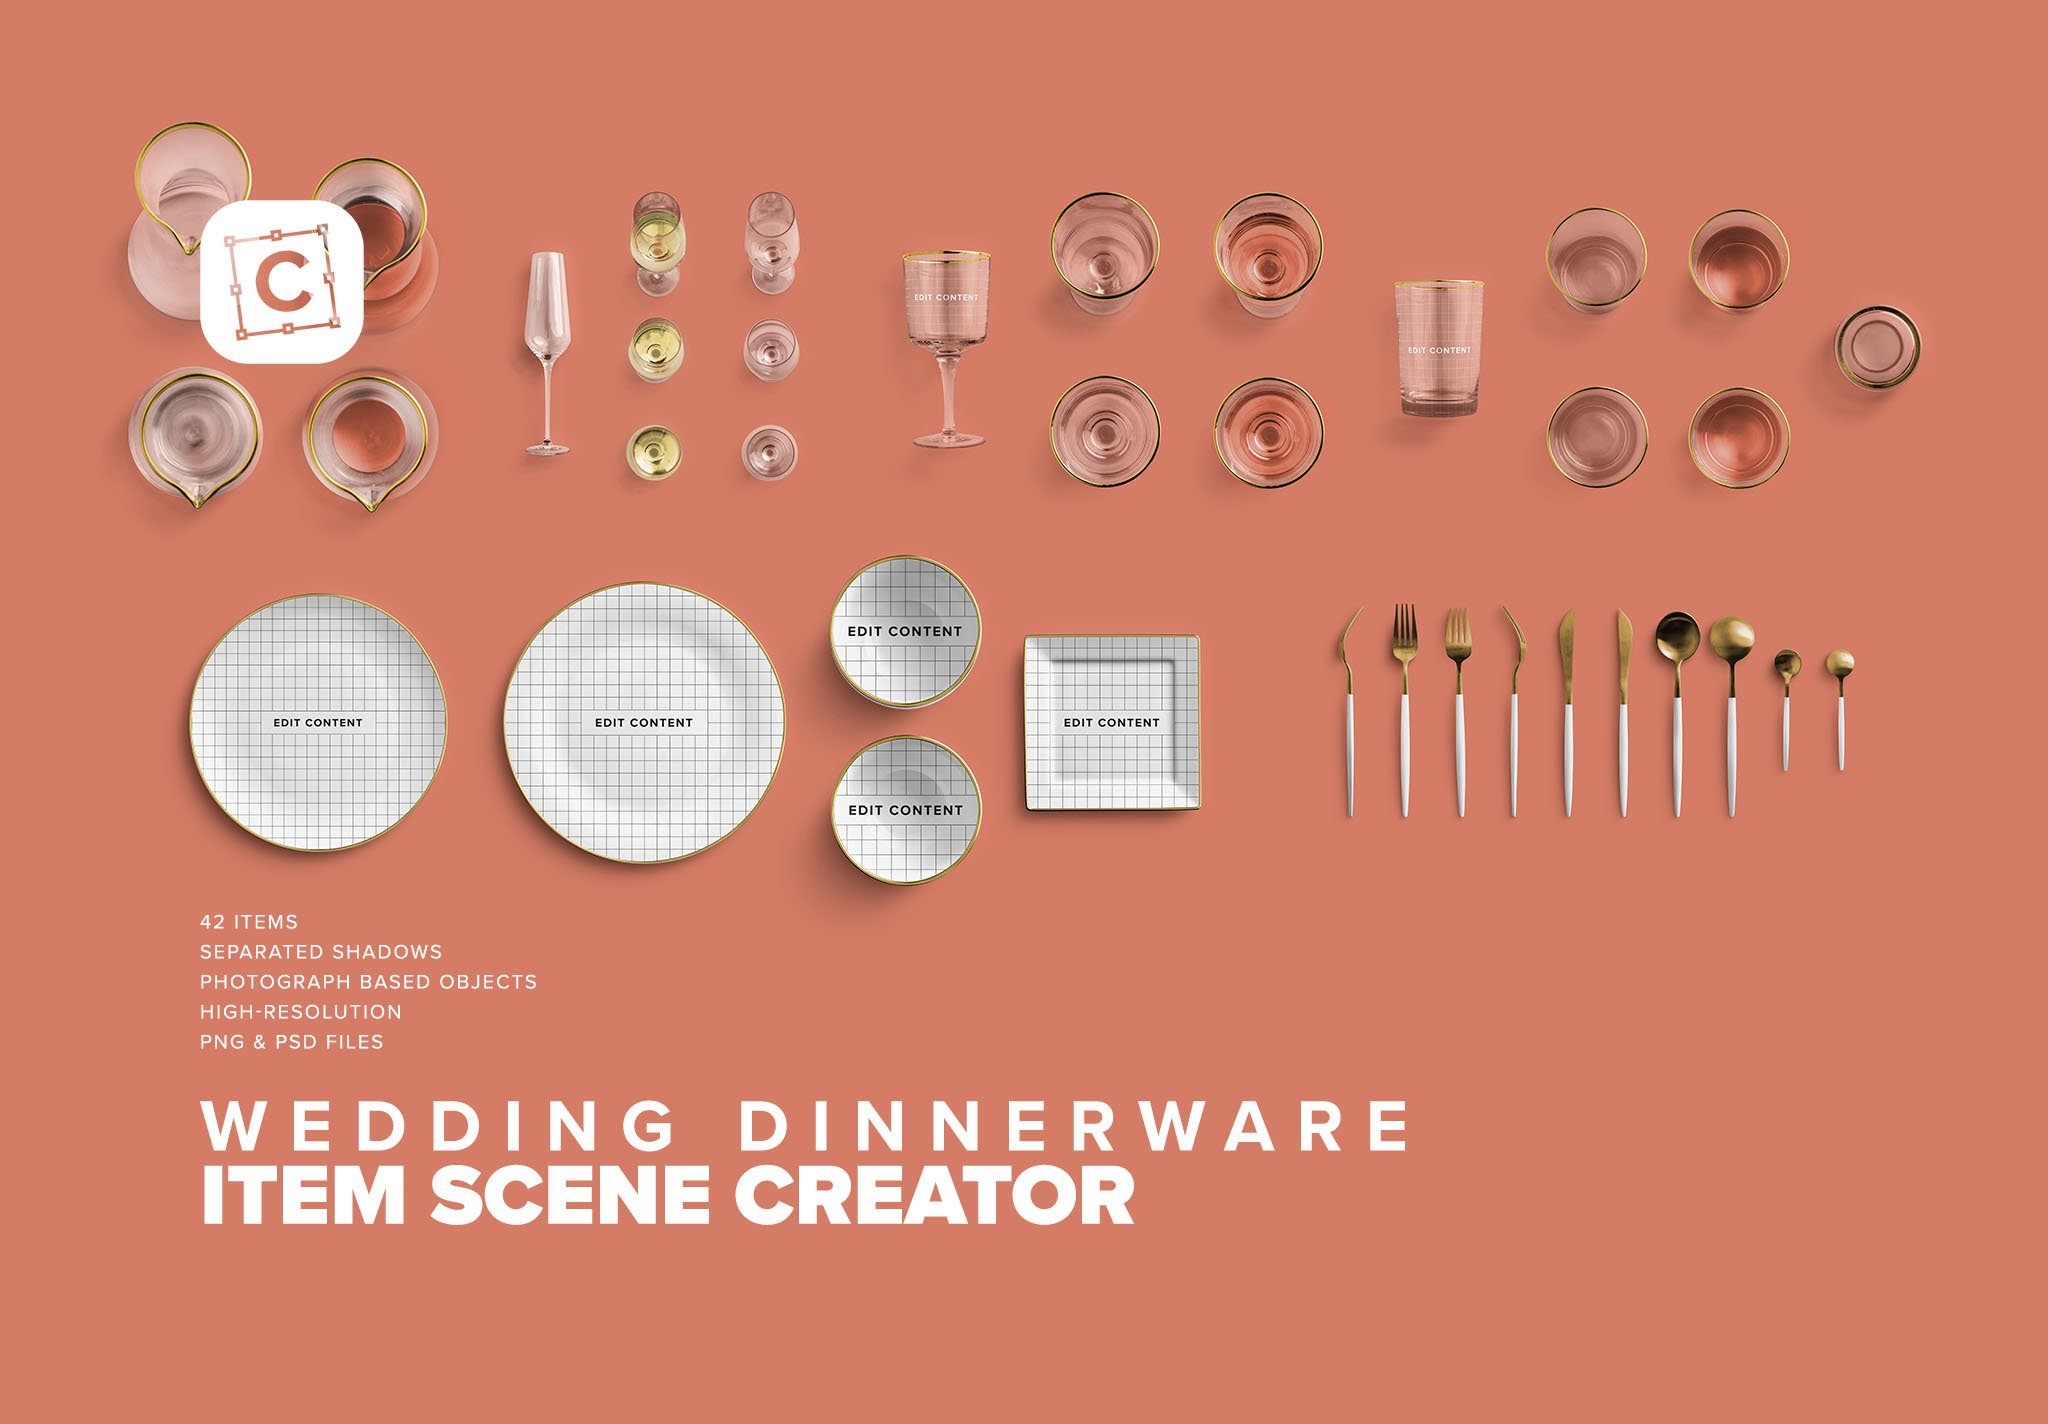 Wedding Dinnerware Scene Creator cover image.